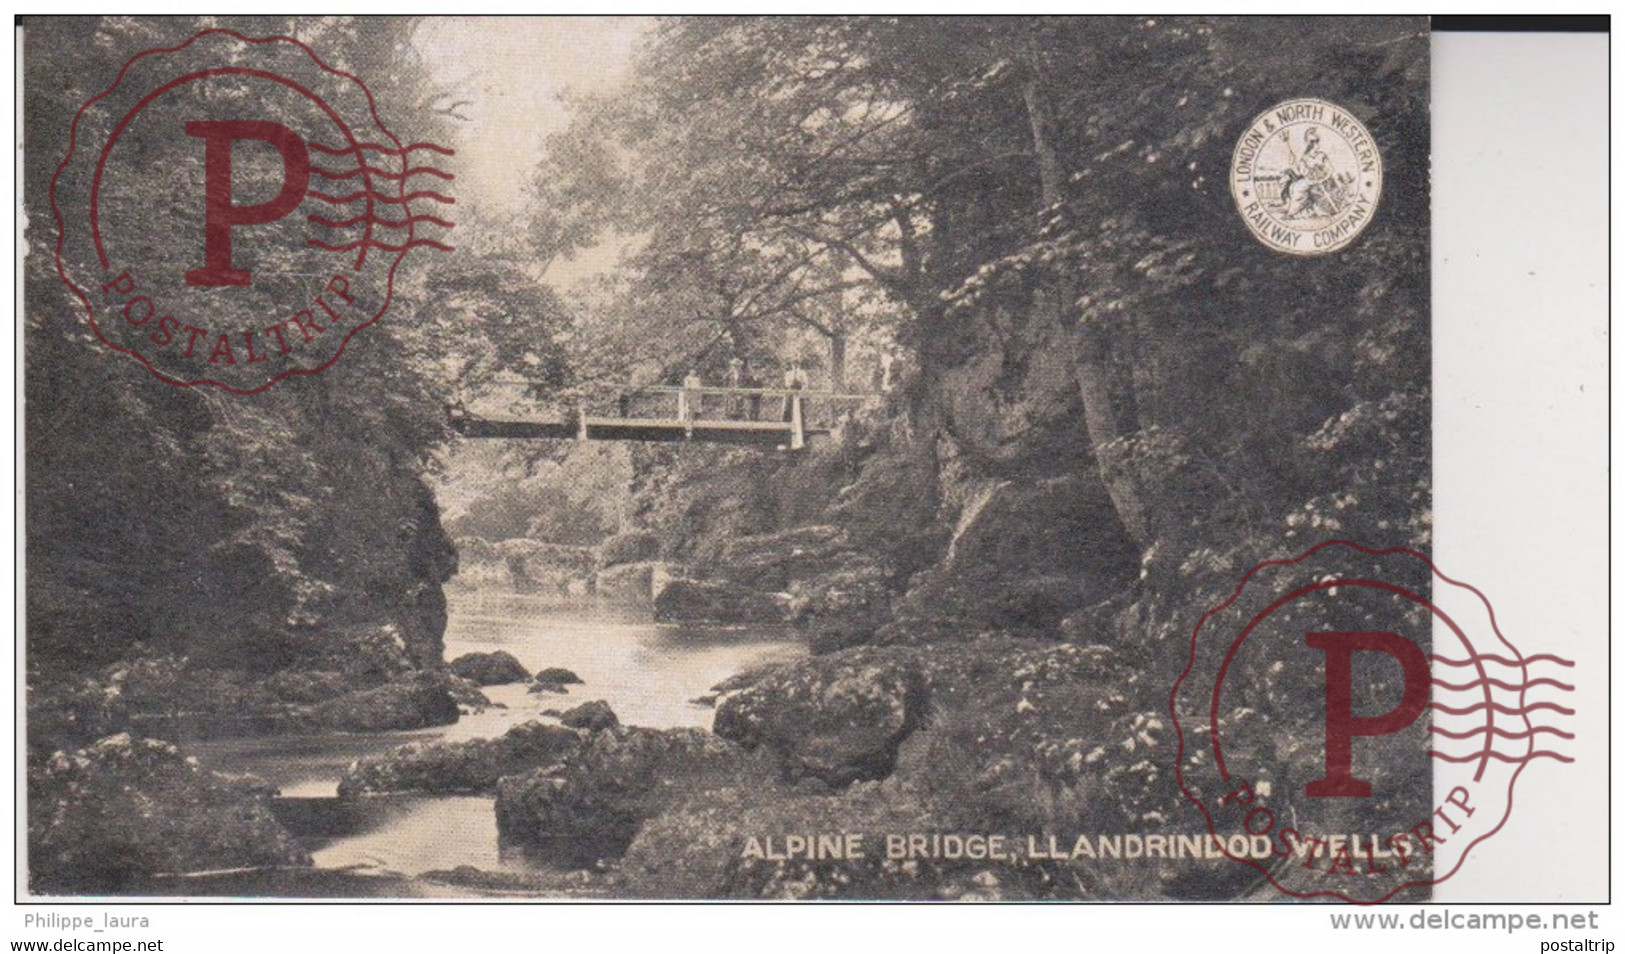 Alpine Bridge Llandrindod Wells - Radnorshire